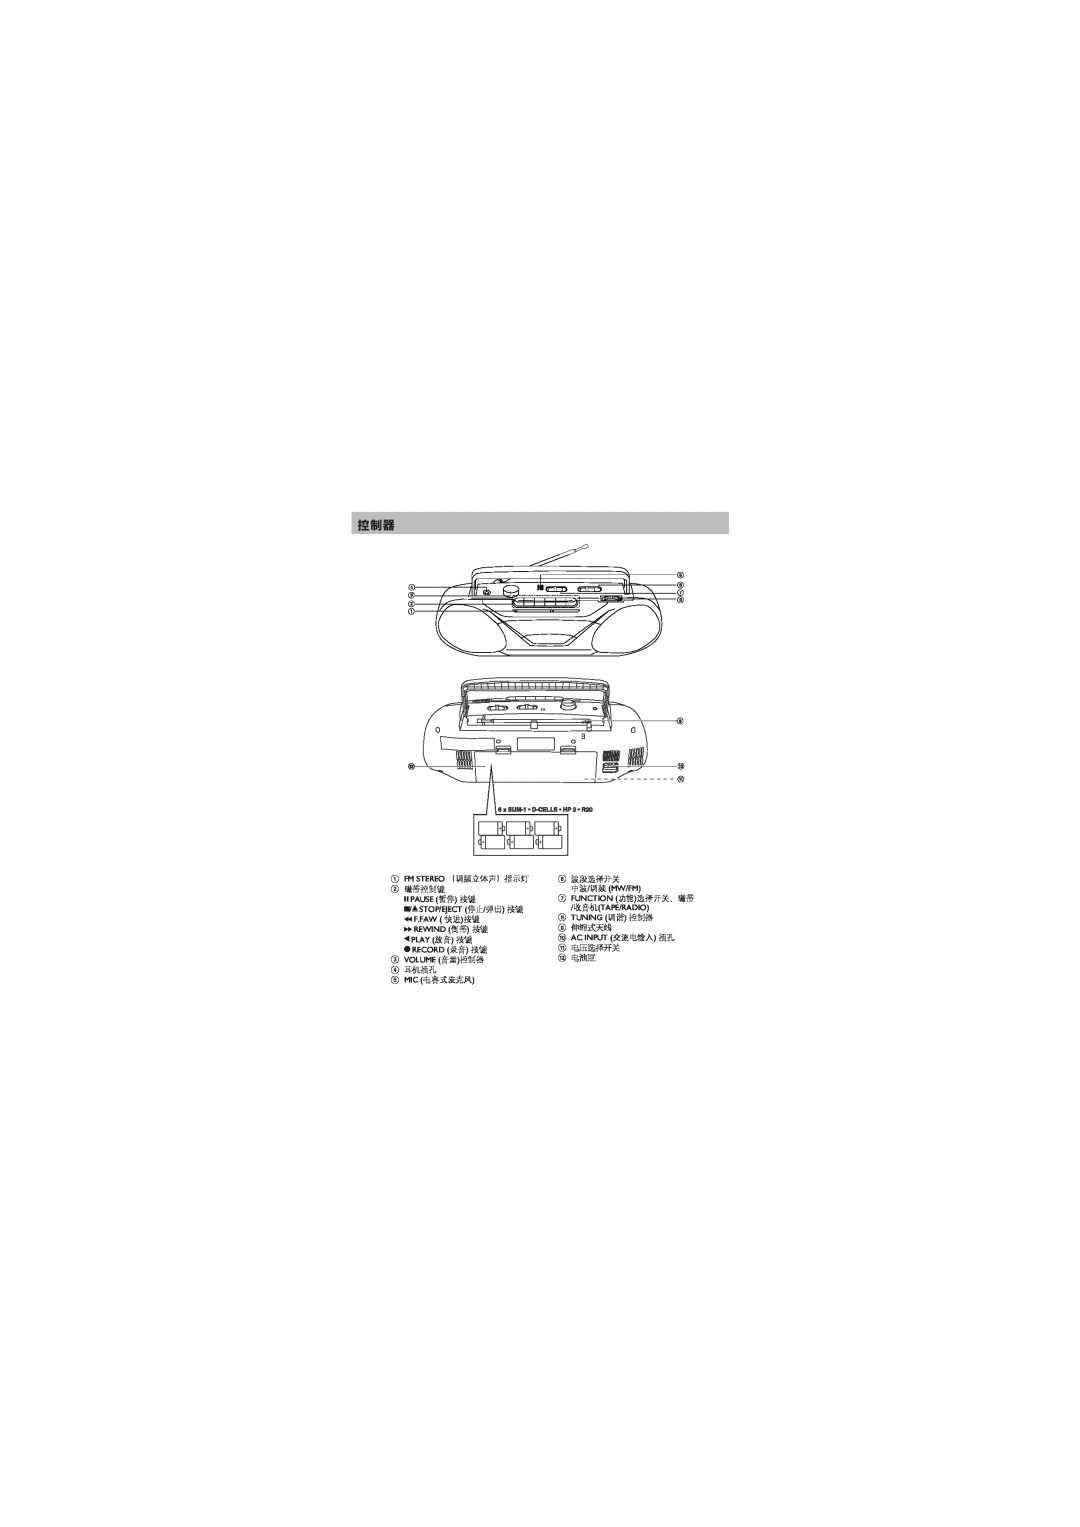 Philips AQ5130/93 manual 波段选择开关, 磁带控制键, 伸缩式天线, 电压选择 关, 4耳机插孔 